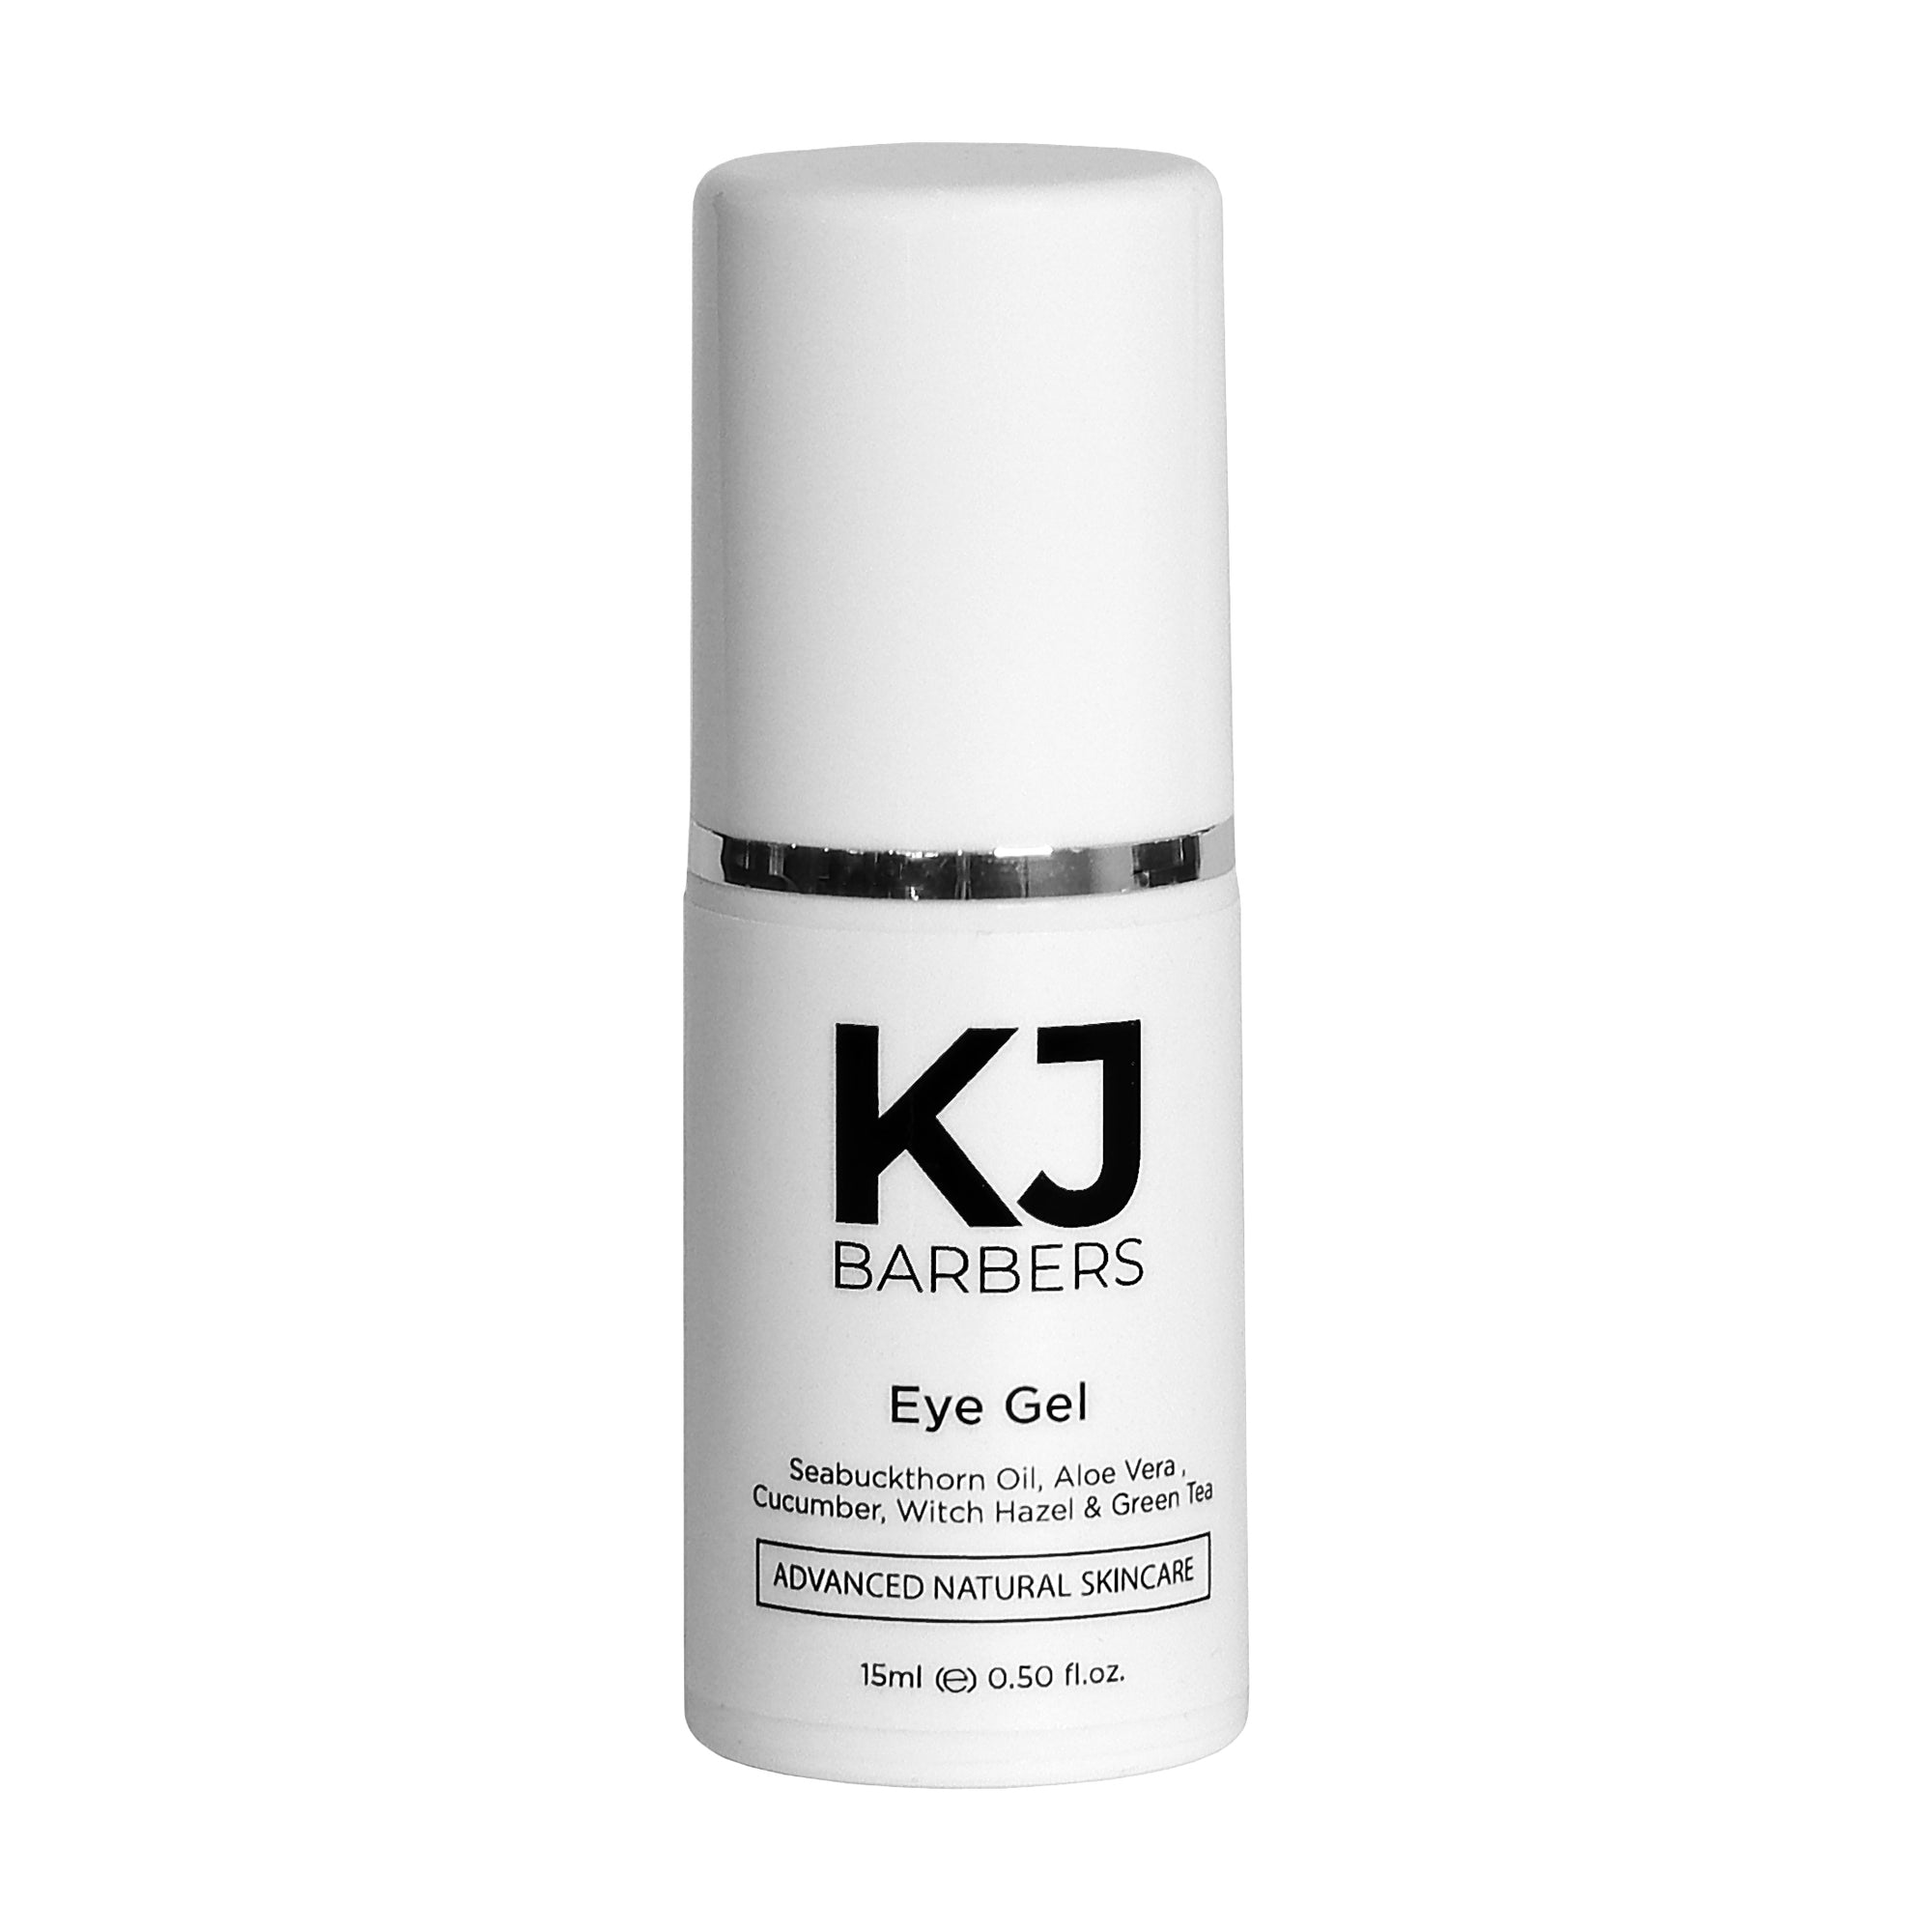 KJ Barbers Eye Gel uses aloe vera and cucumber oil to sooth and moisturise the skin, diminishing the appearance of eye bags.